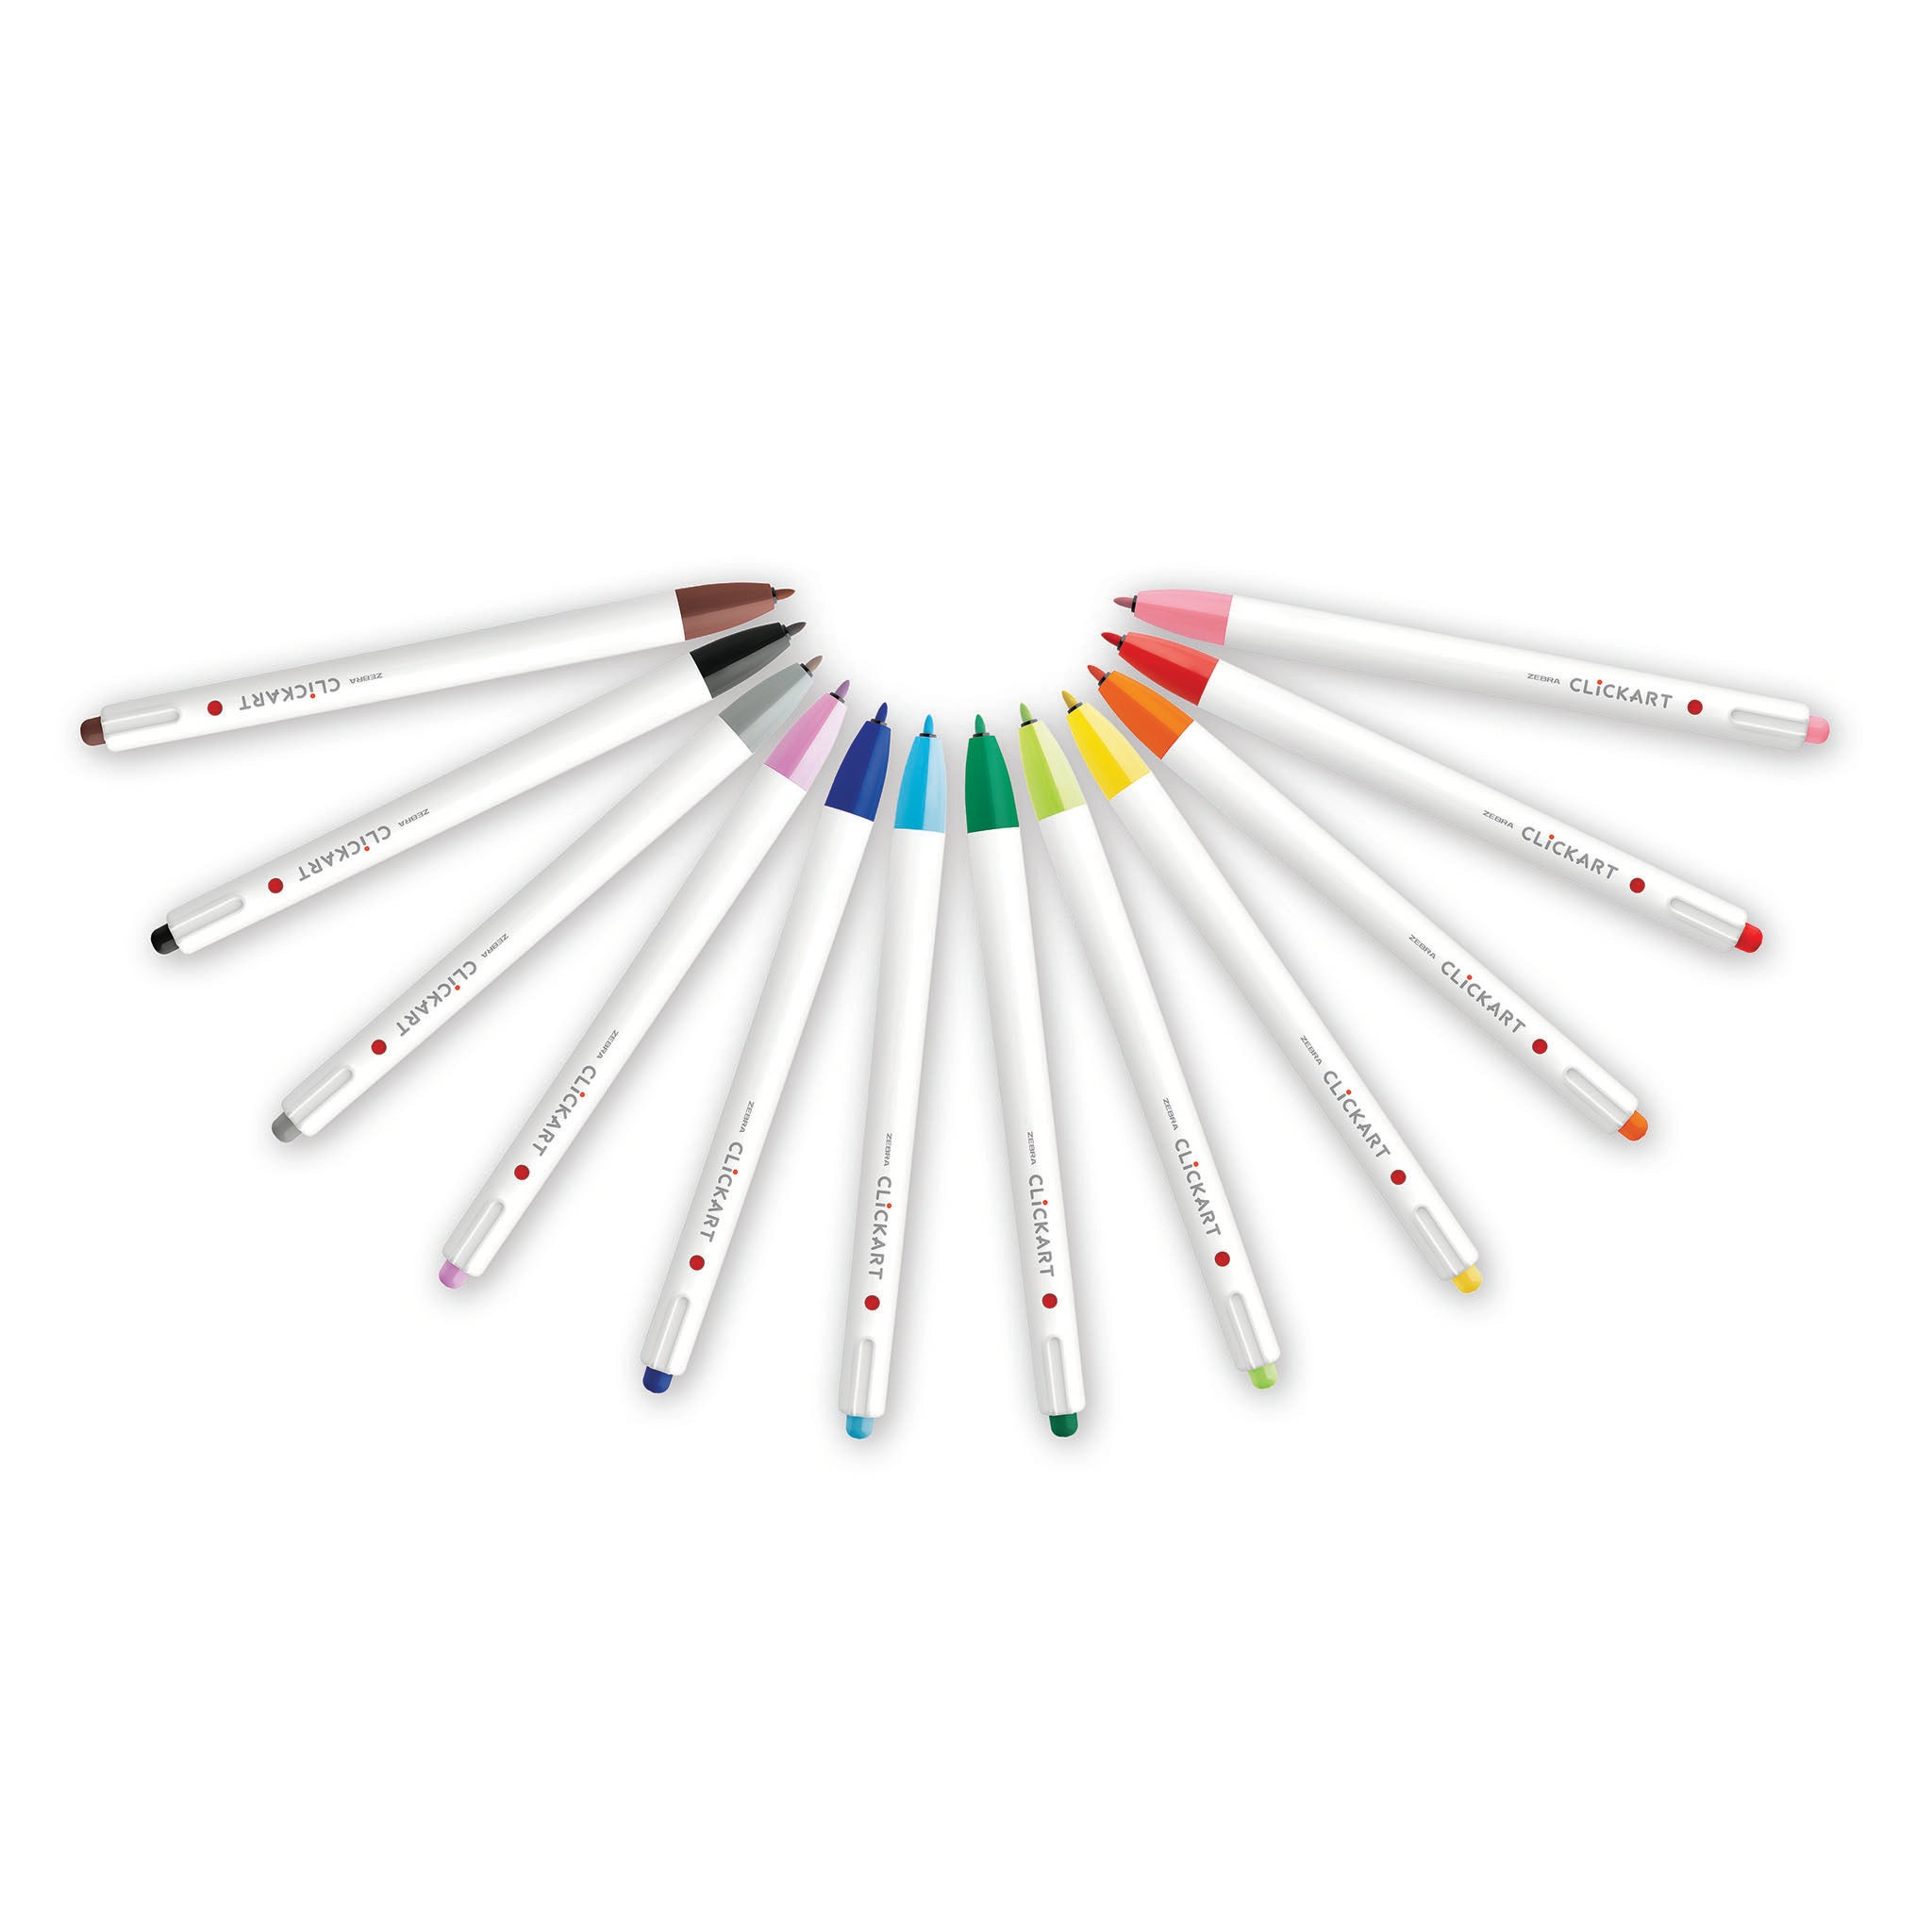 Zebra ClickArt Retractable Marker Pens Set of 12 - Standard – Jenni Bick  Custom Journals